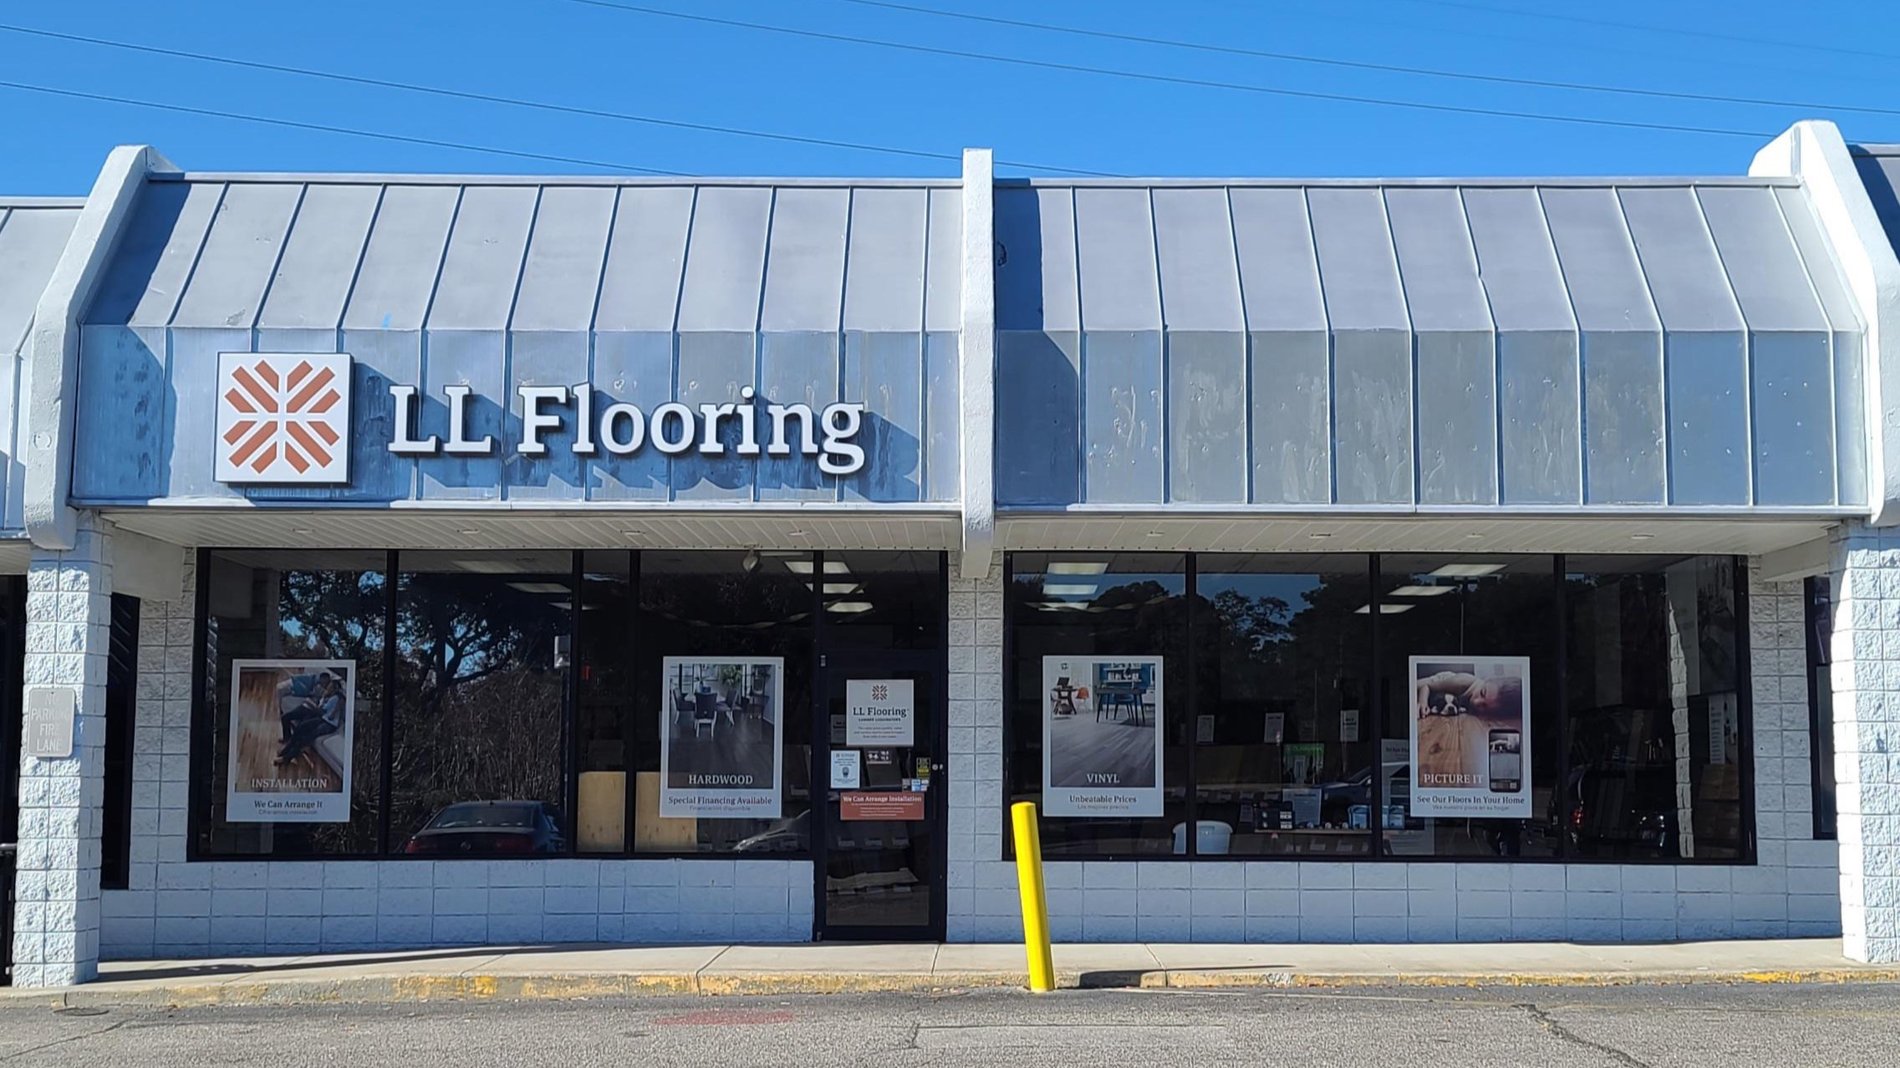 LL Flooring #1381 Murrells Inlet | 3338 US 17 Bus | Storefront